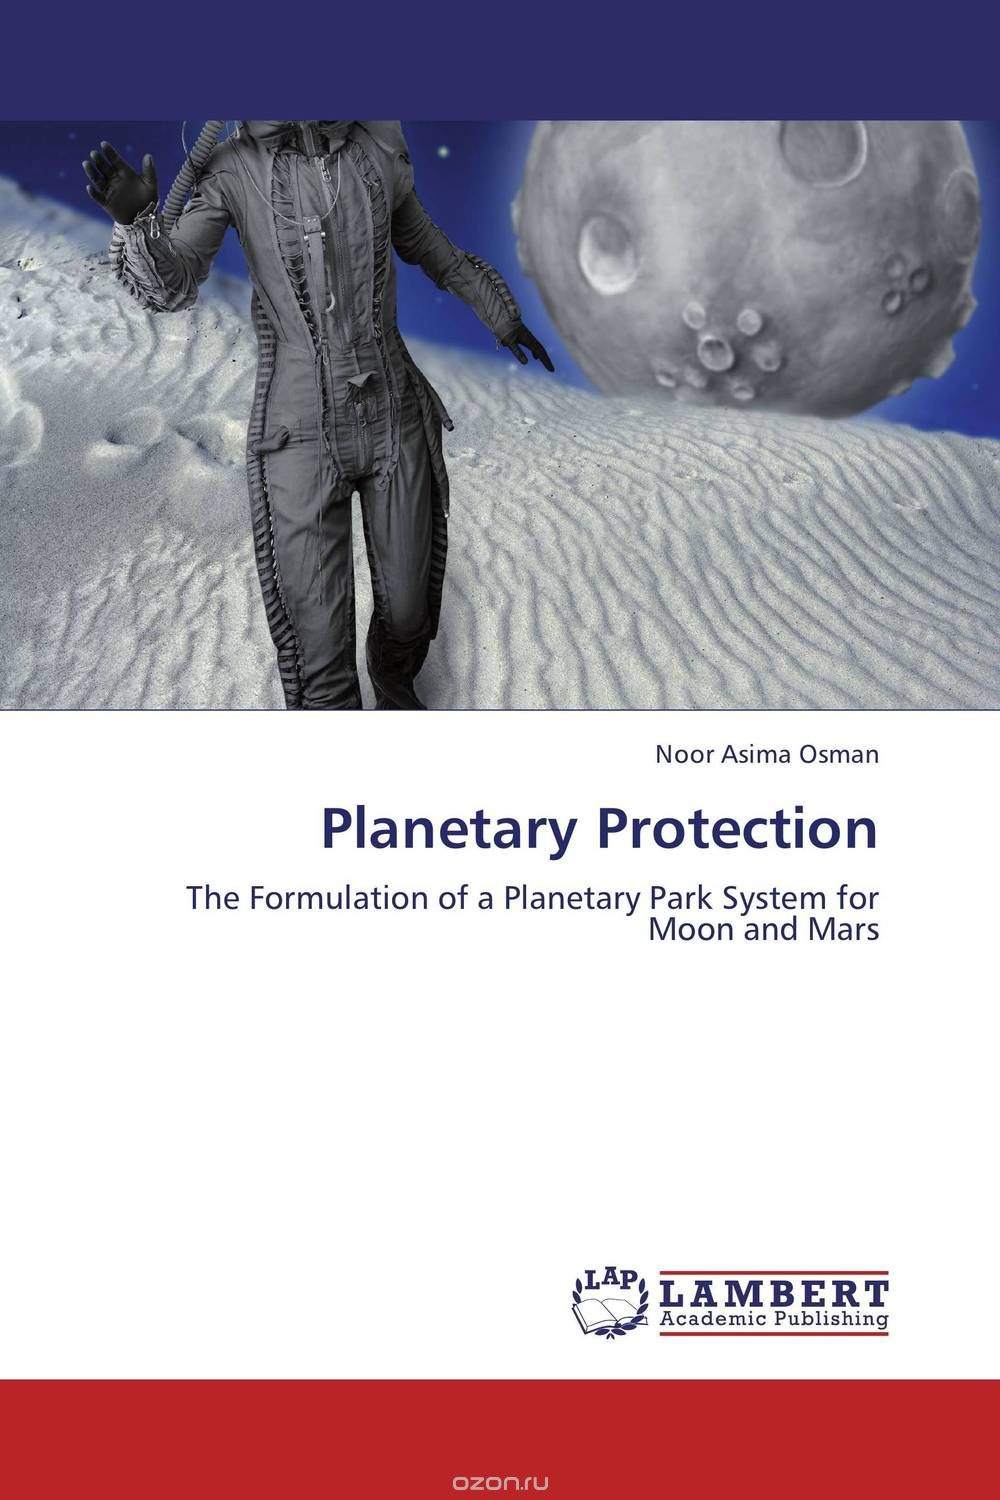 Скачать книгу "Planetary Protection"